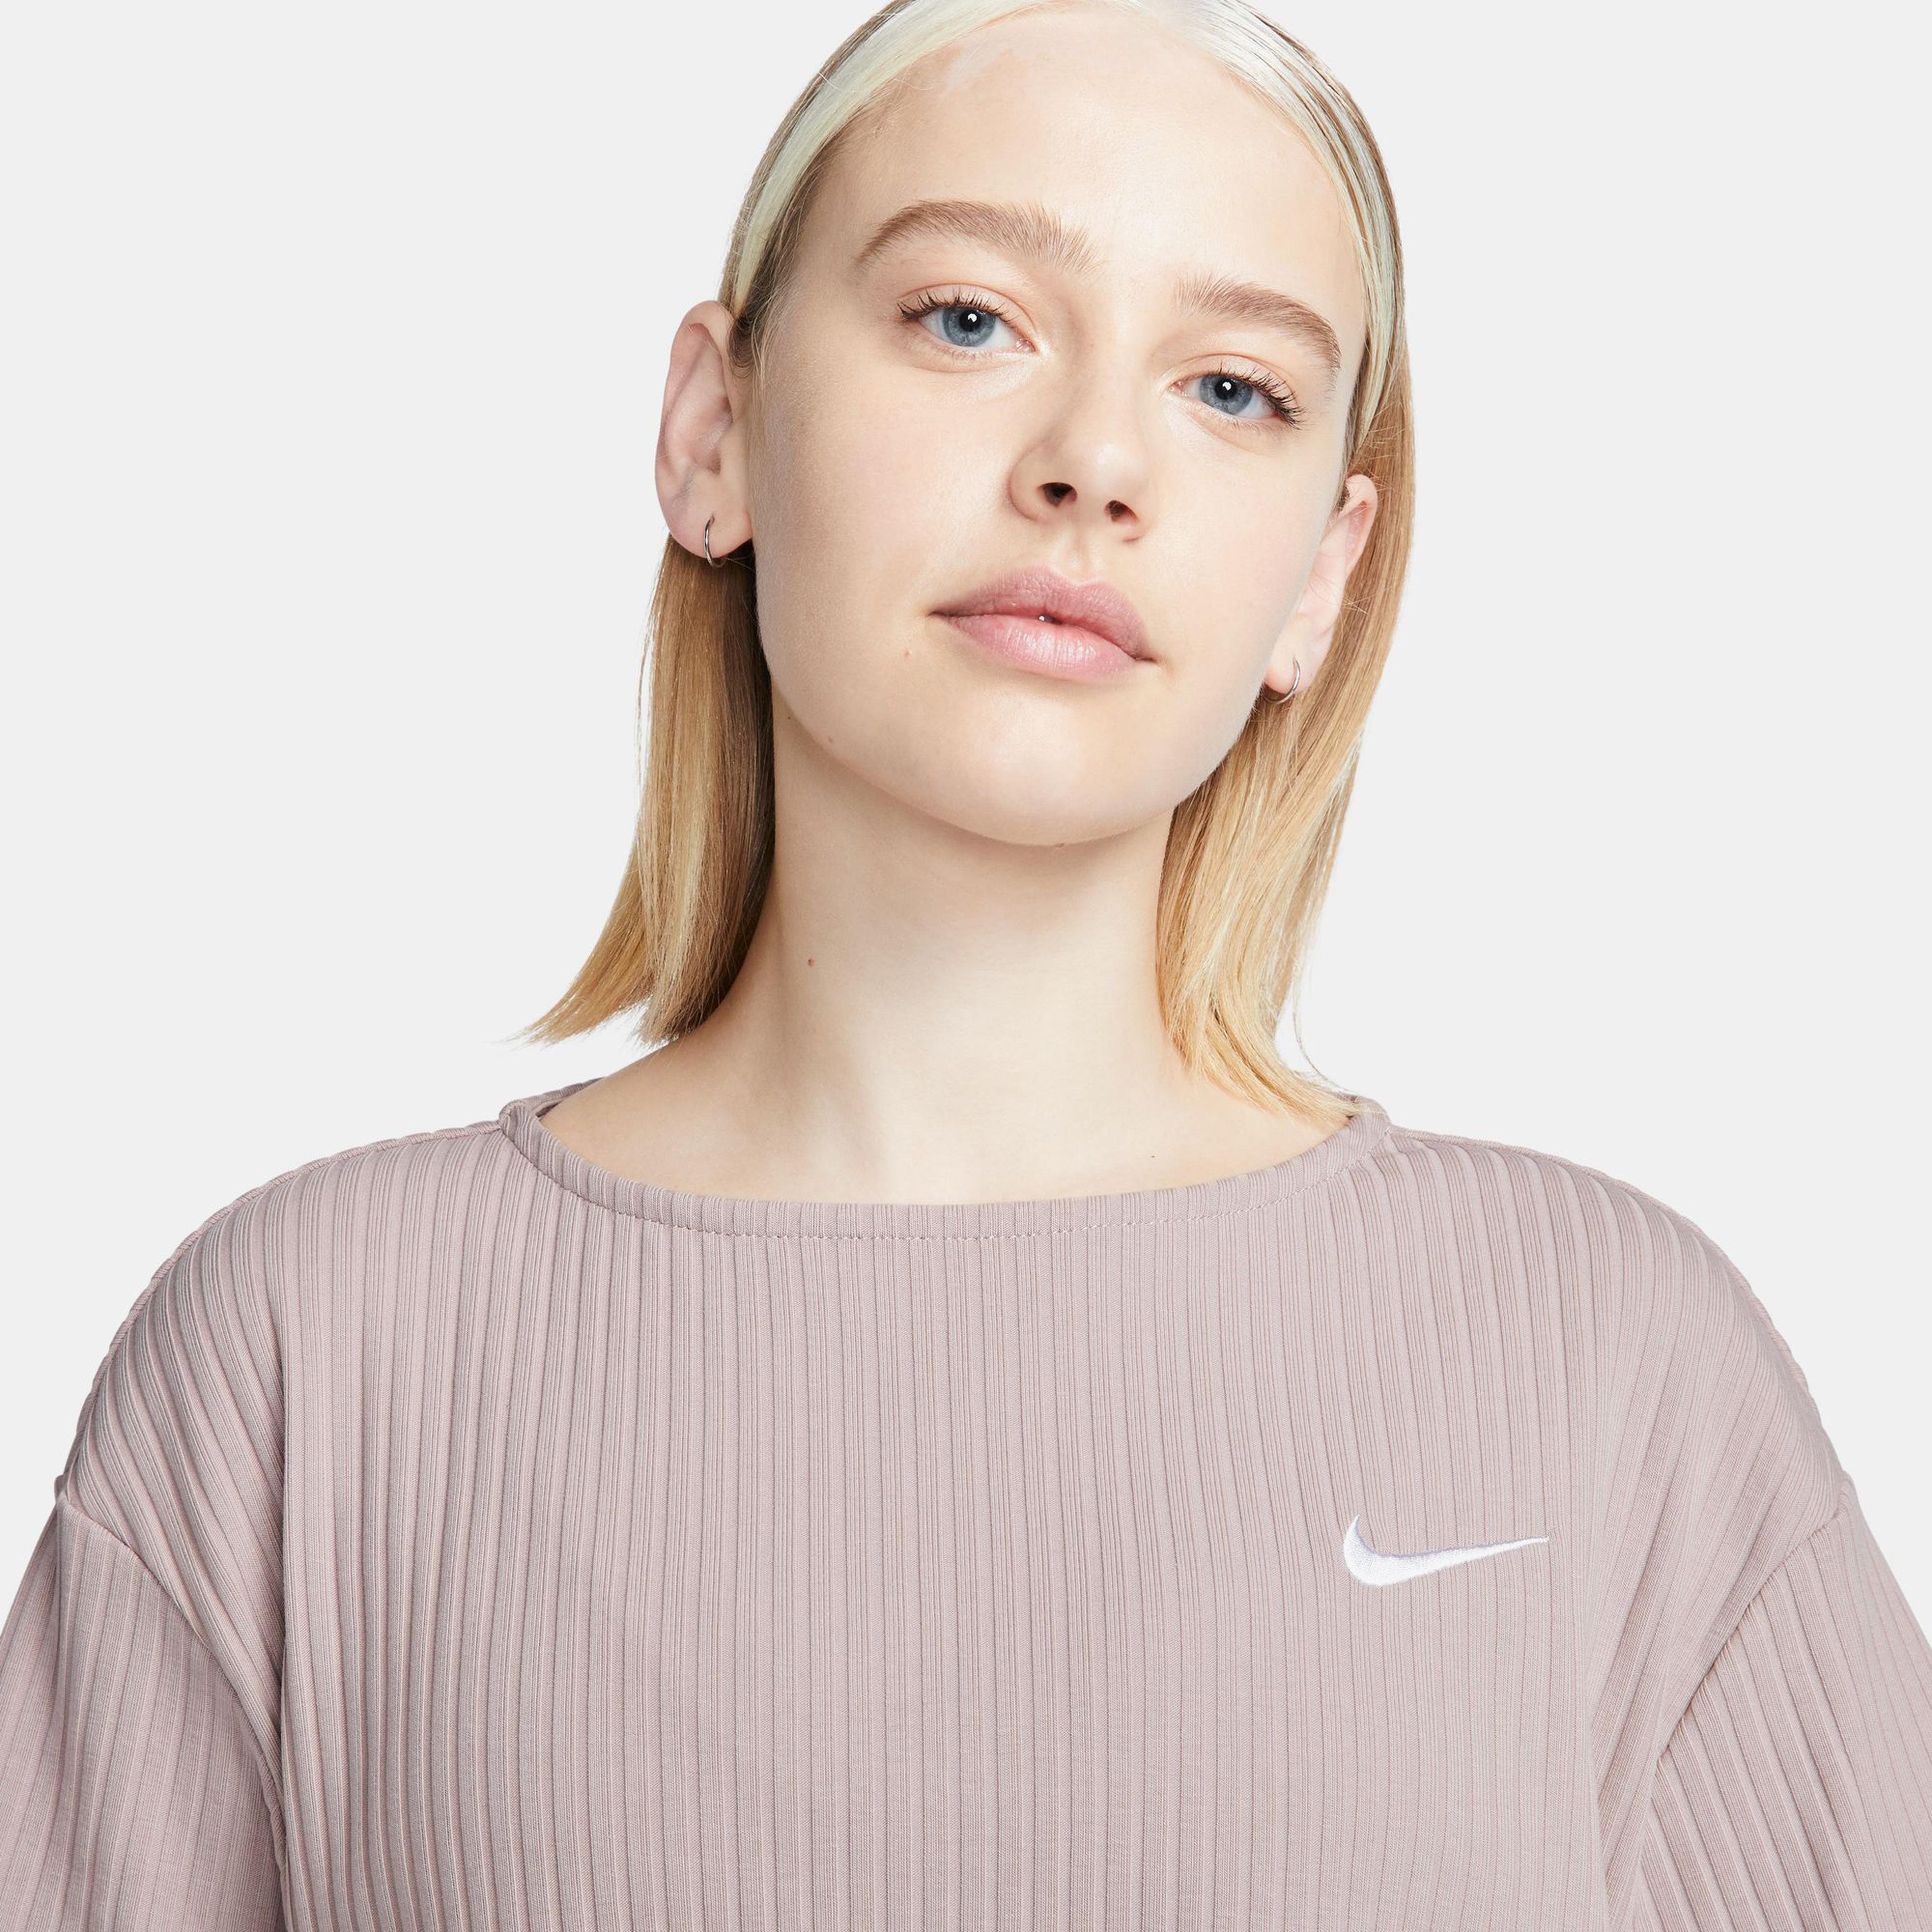 Nike Ribbed Jersey Short-Sleeve Kadın Kahverengi T-Shirt